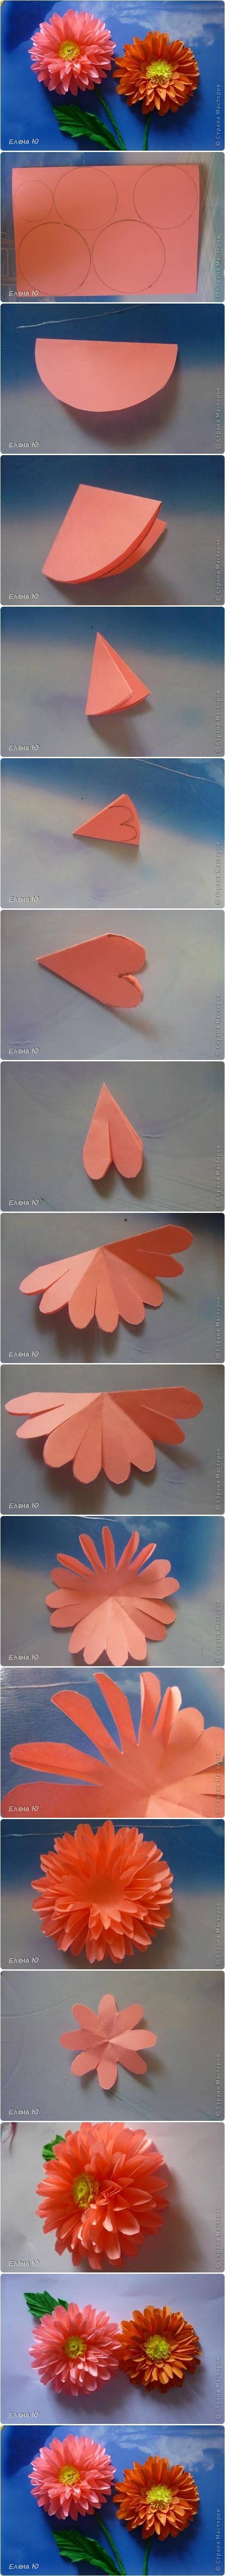 زفاف - How To Make Paper Dahlias